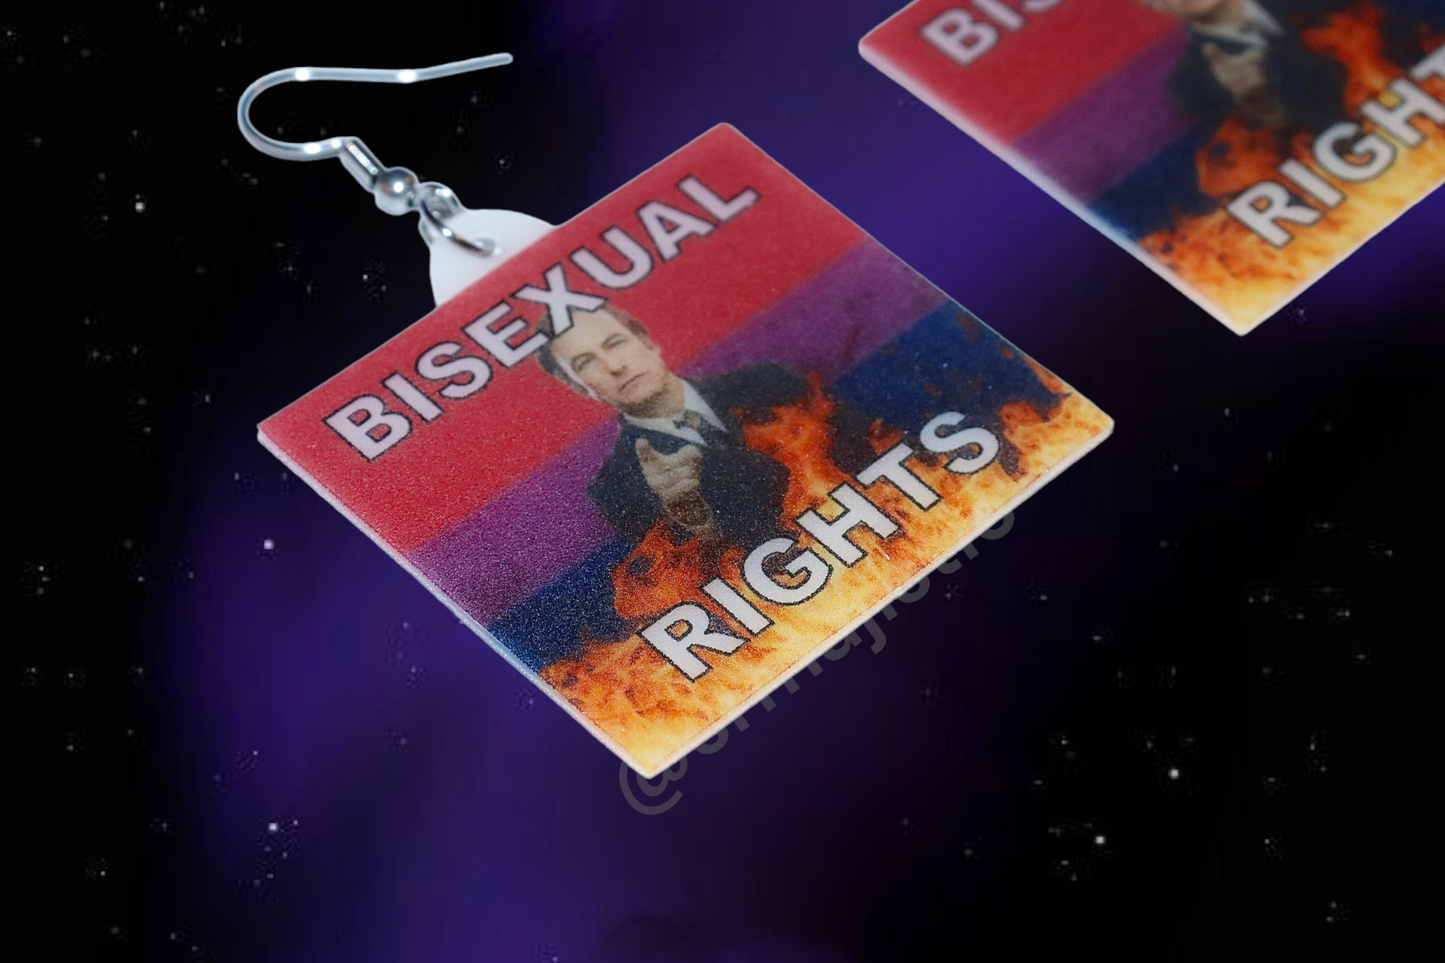 Better Call Saul Bisexual Flame Pride Flag Handmade Earrings!